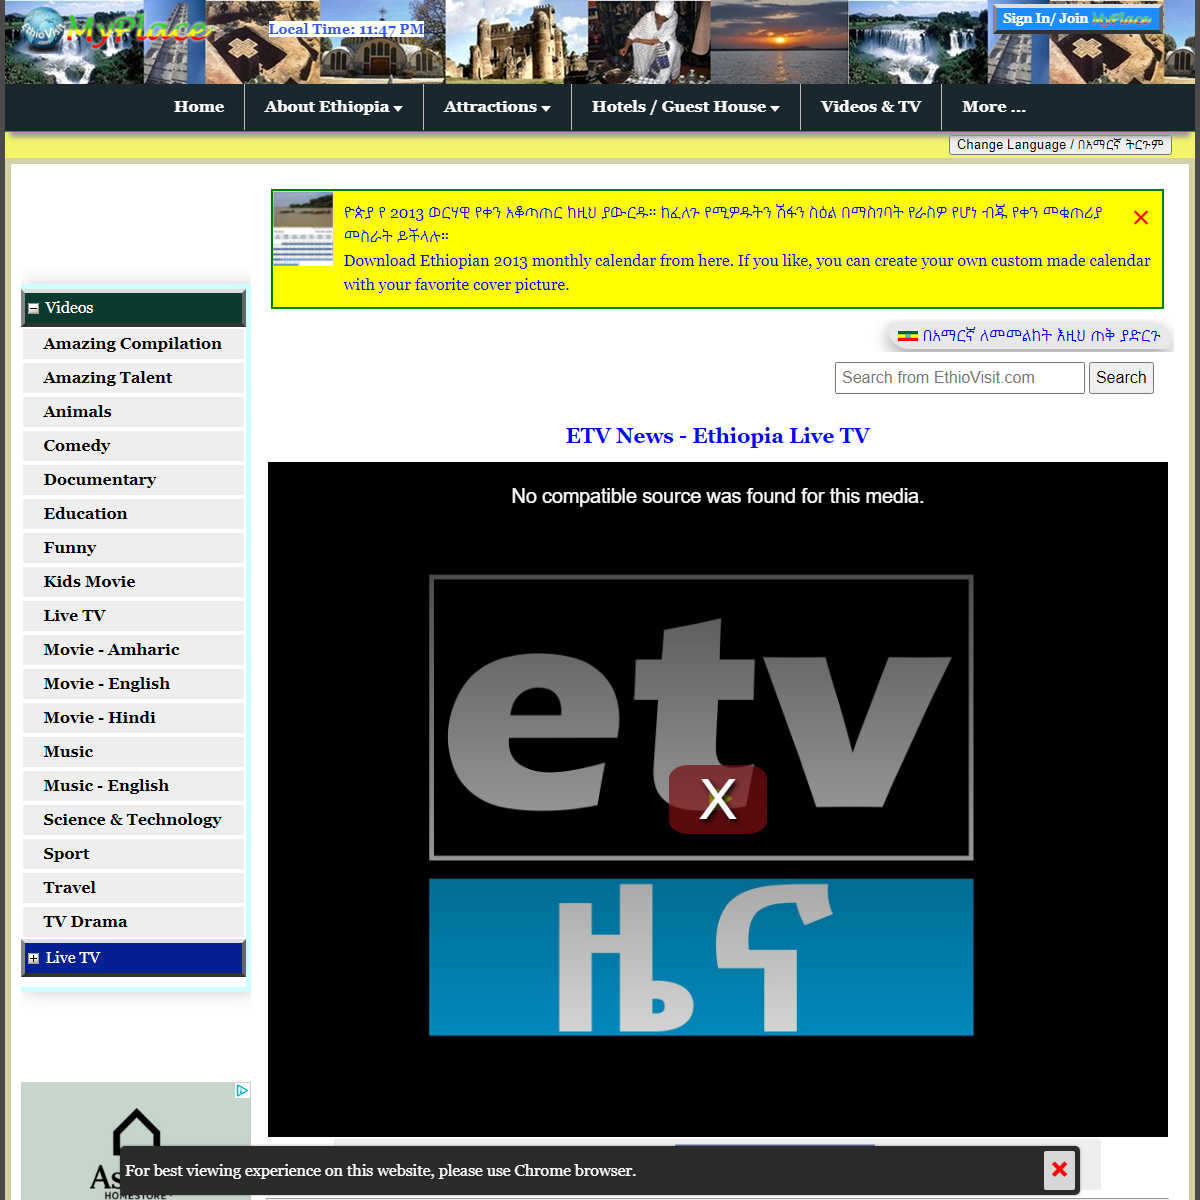 A complete backup of https://www.ethiovisit.com/videos/etv-news--ethiopia-live-tv/2805/